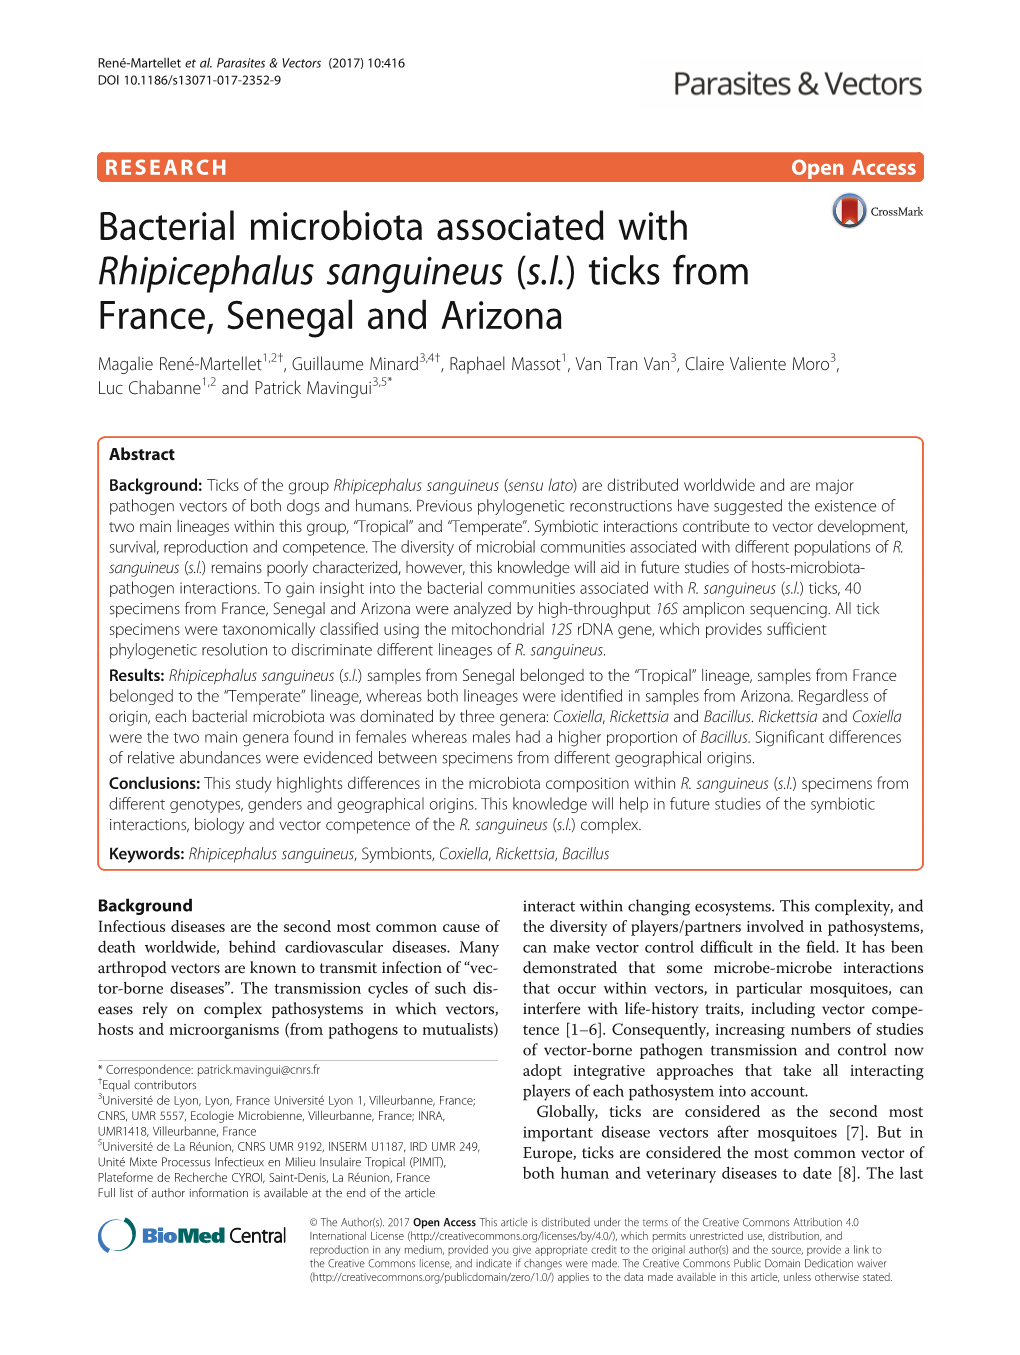 Bacterial Microbiota Associated with Rhipicephalus Sanguineus (Sl)